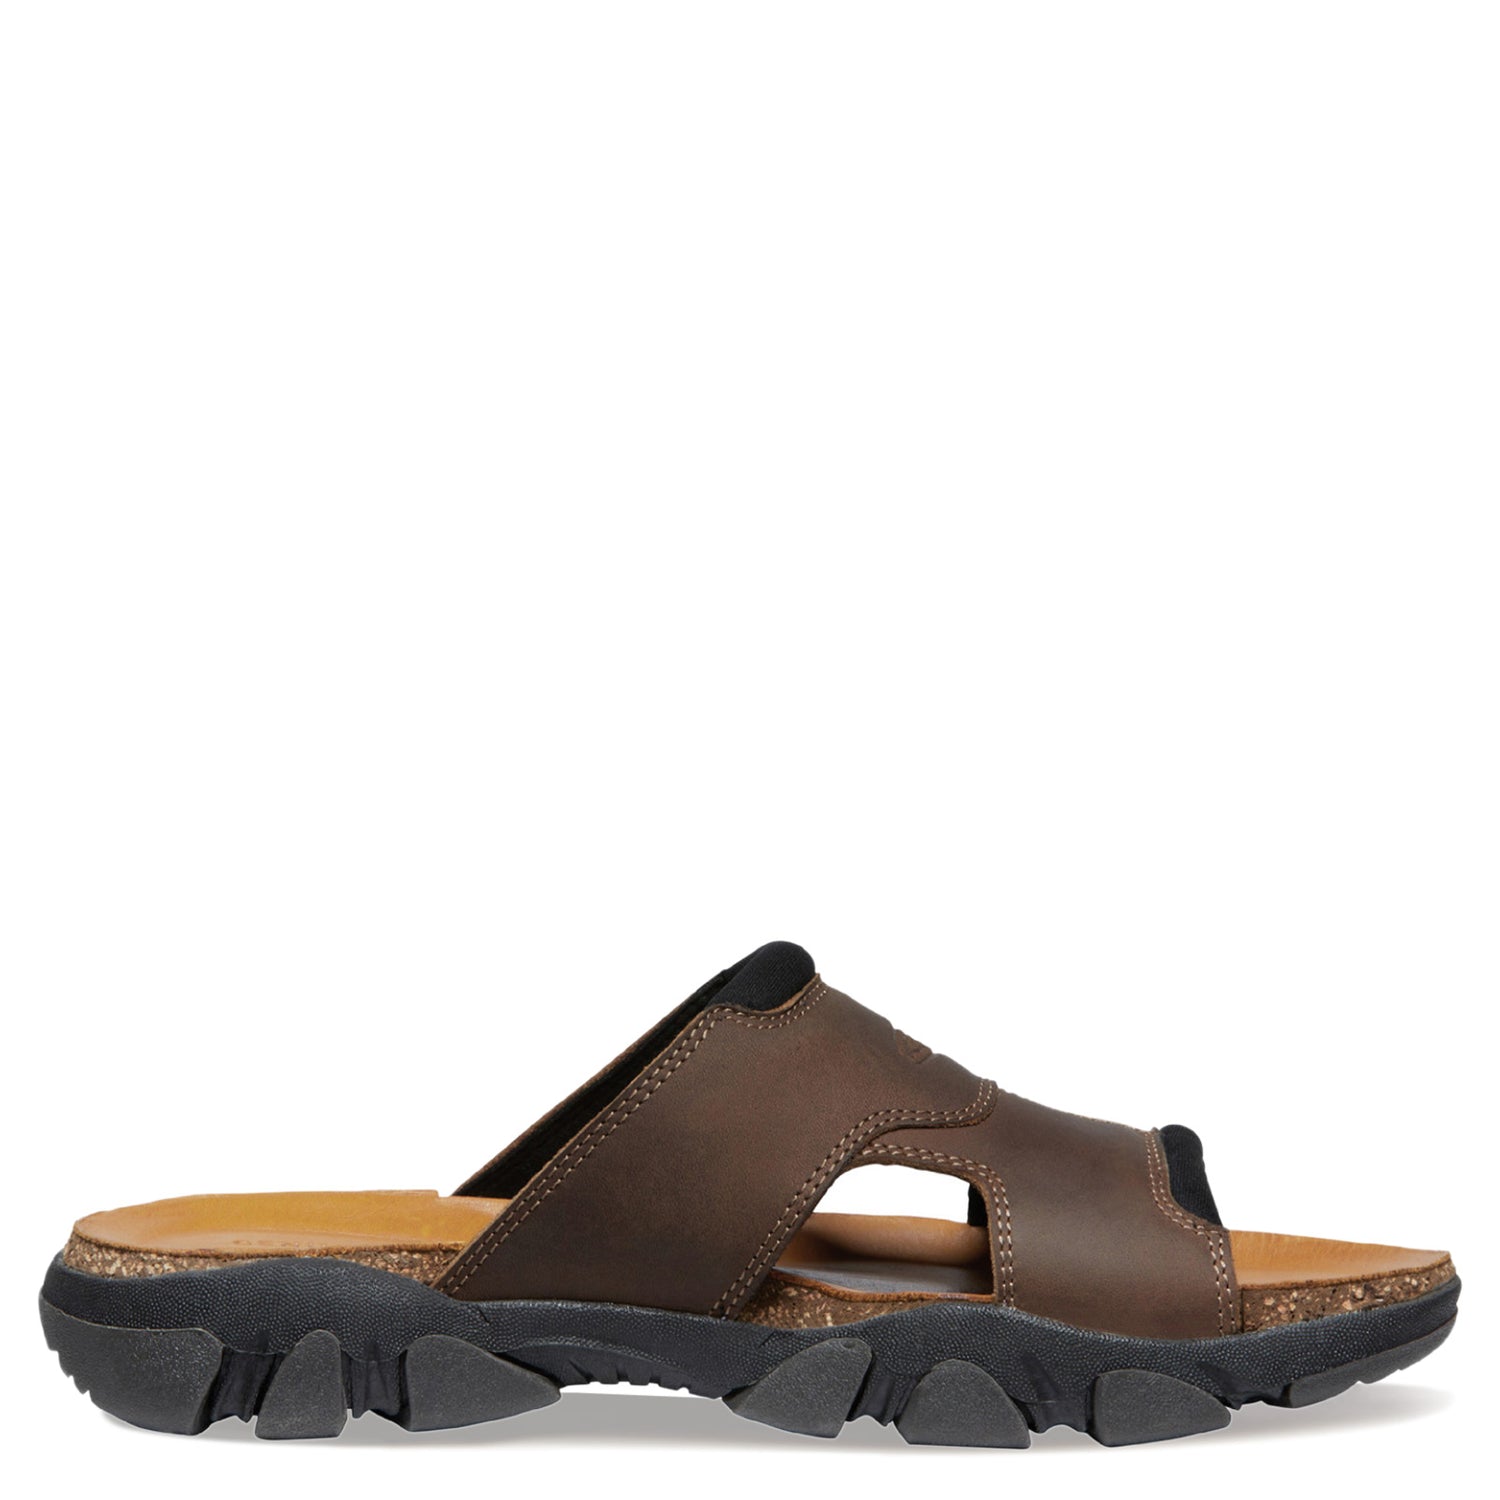 Peltz Shoes  Men's Keen Daytona II Slide Sandal Bison/Black 1027281